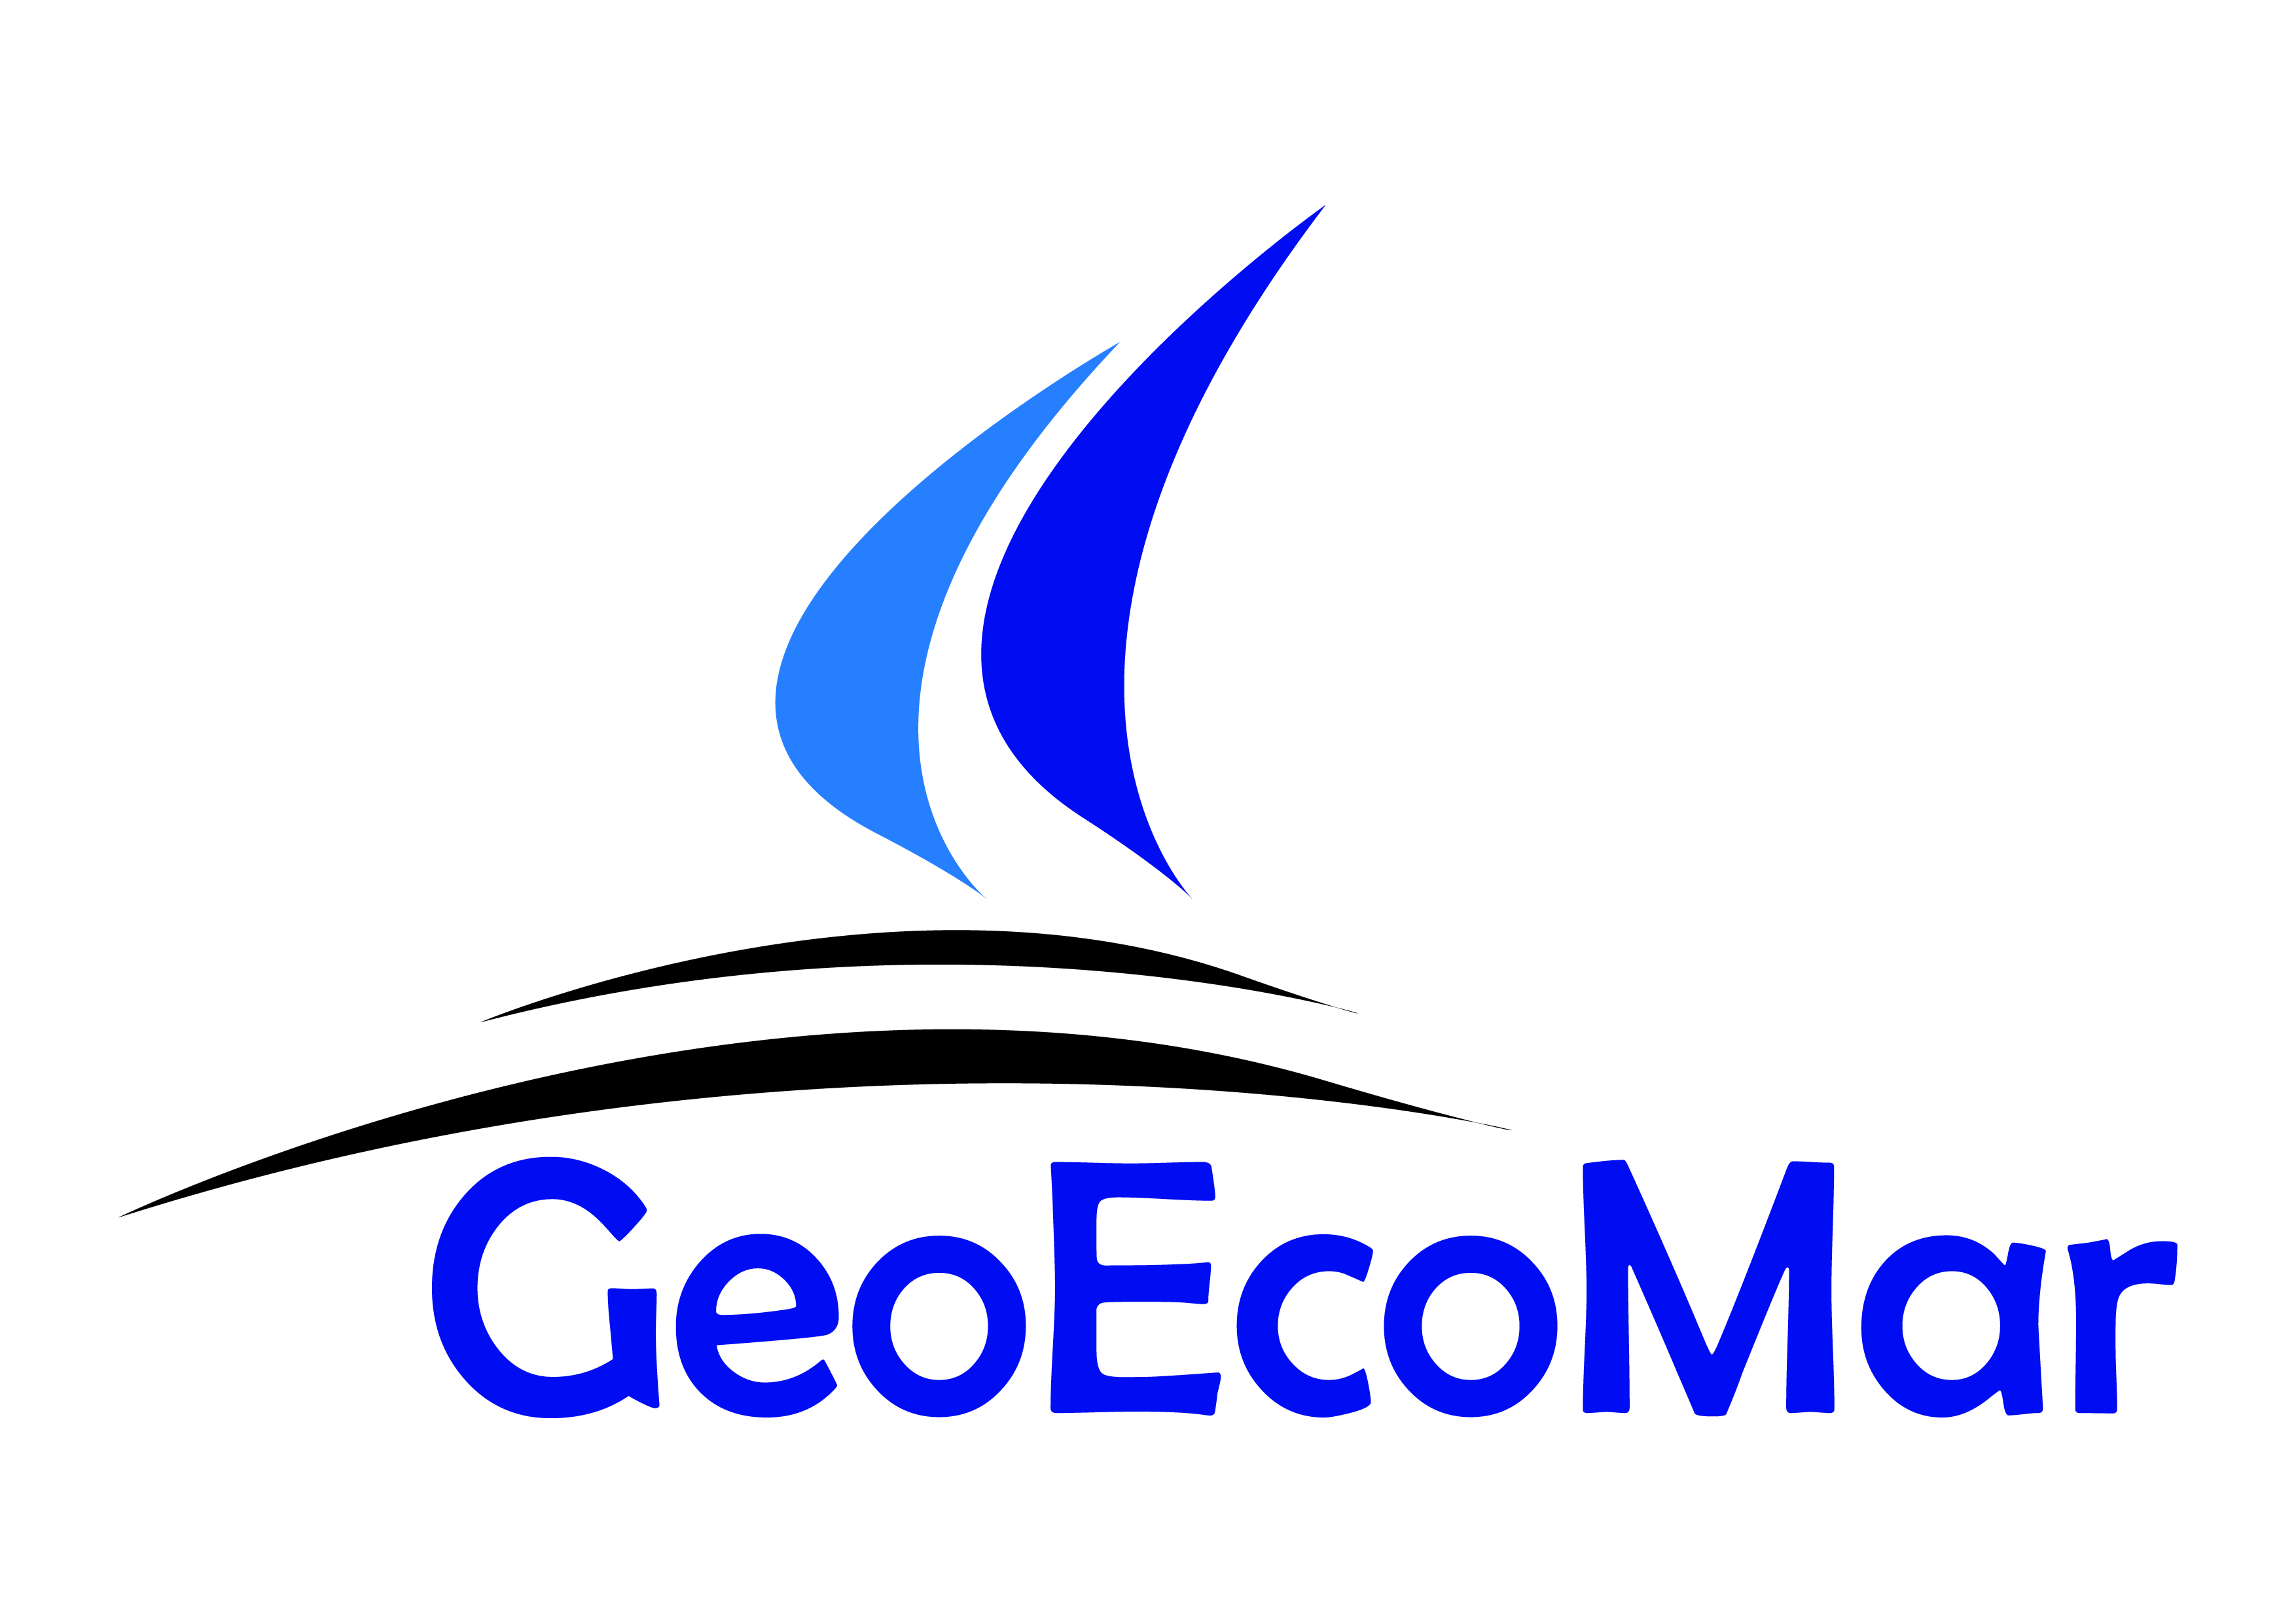 GEOECOMAR logo